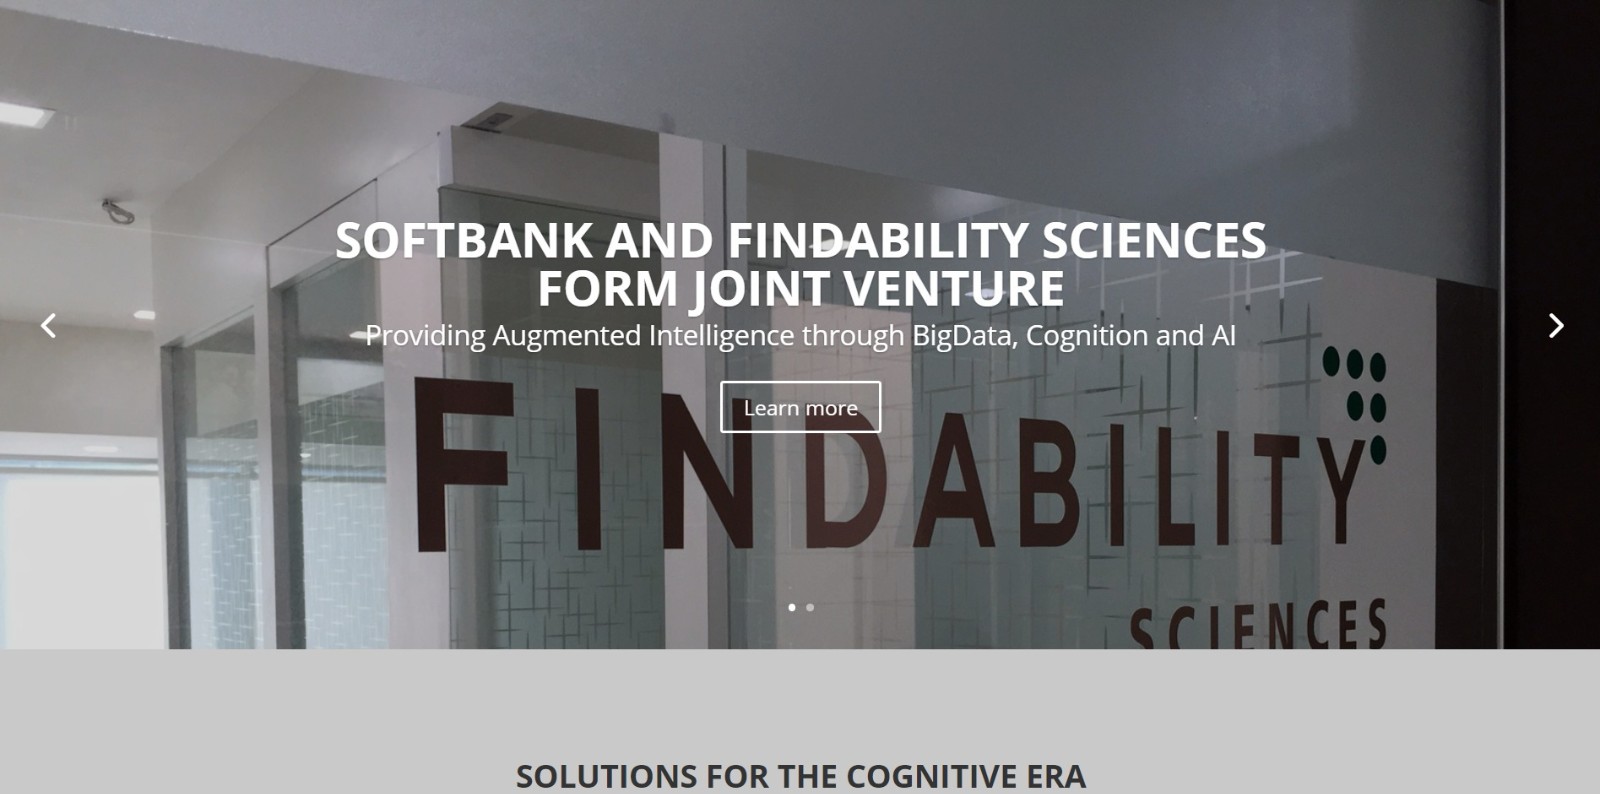 Findability Sciences